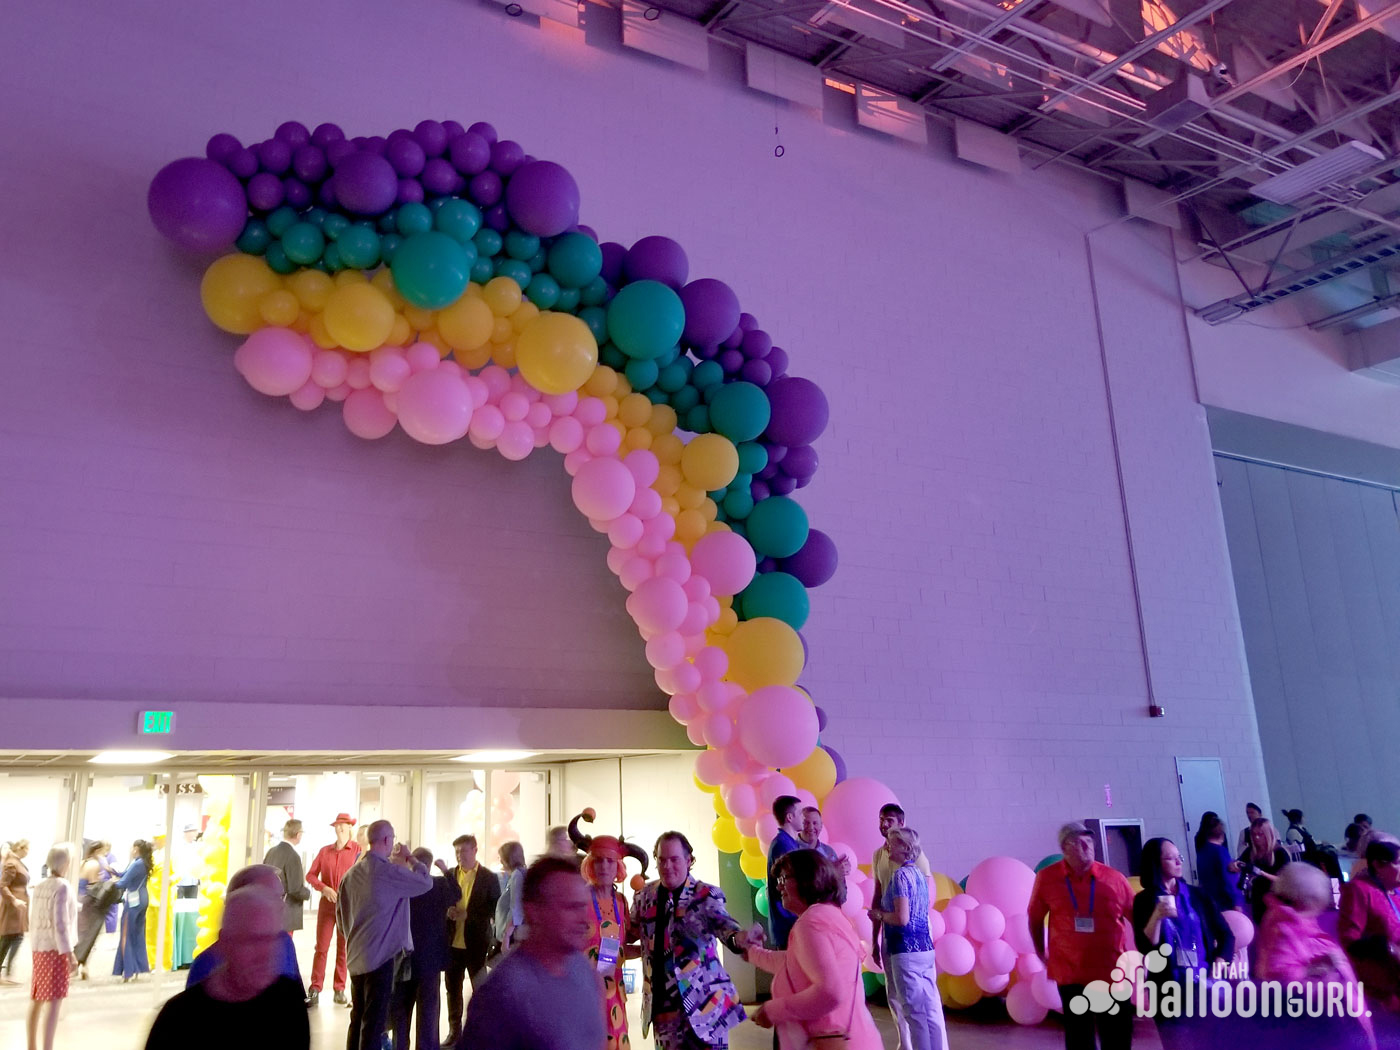 Giant rainbow balloon arch made by Utah Balloon Guru.